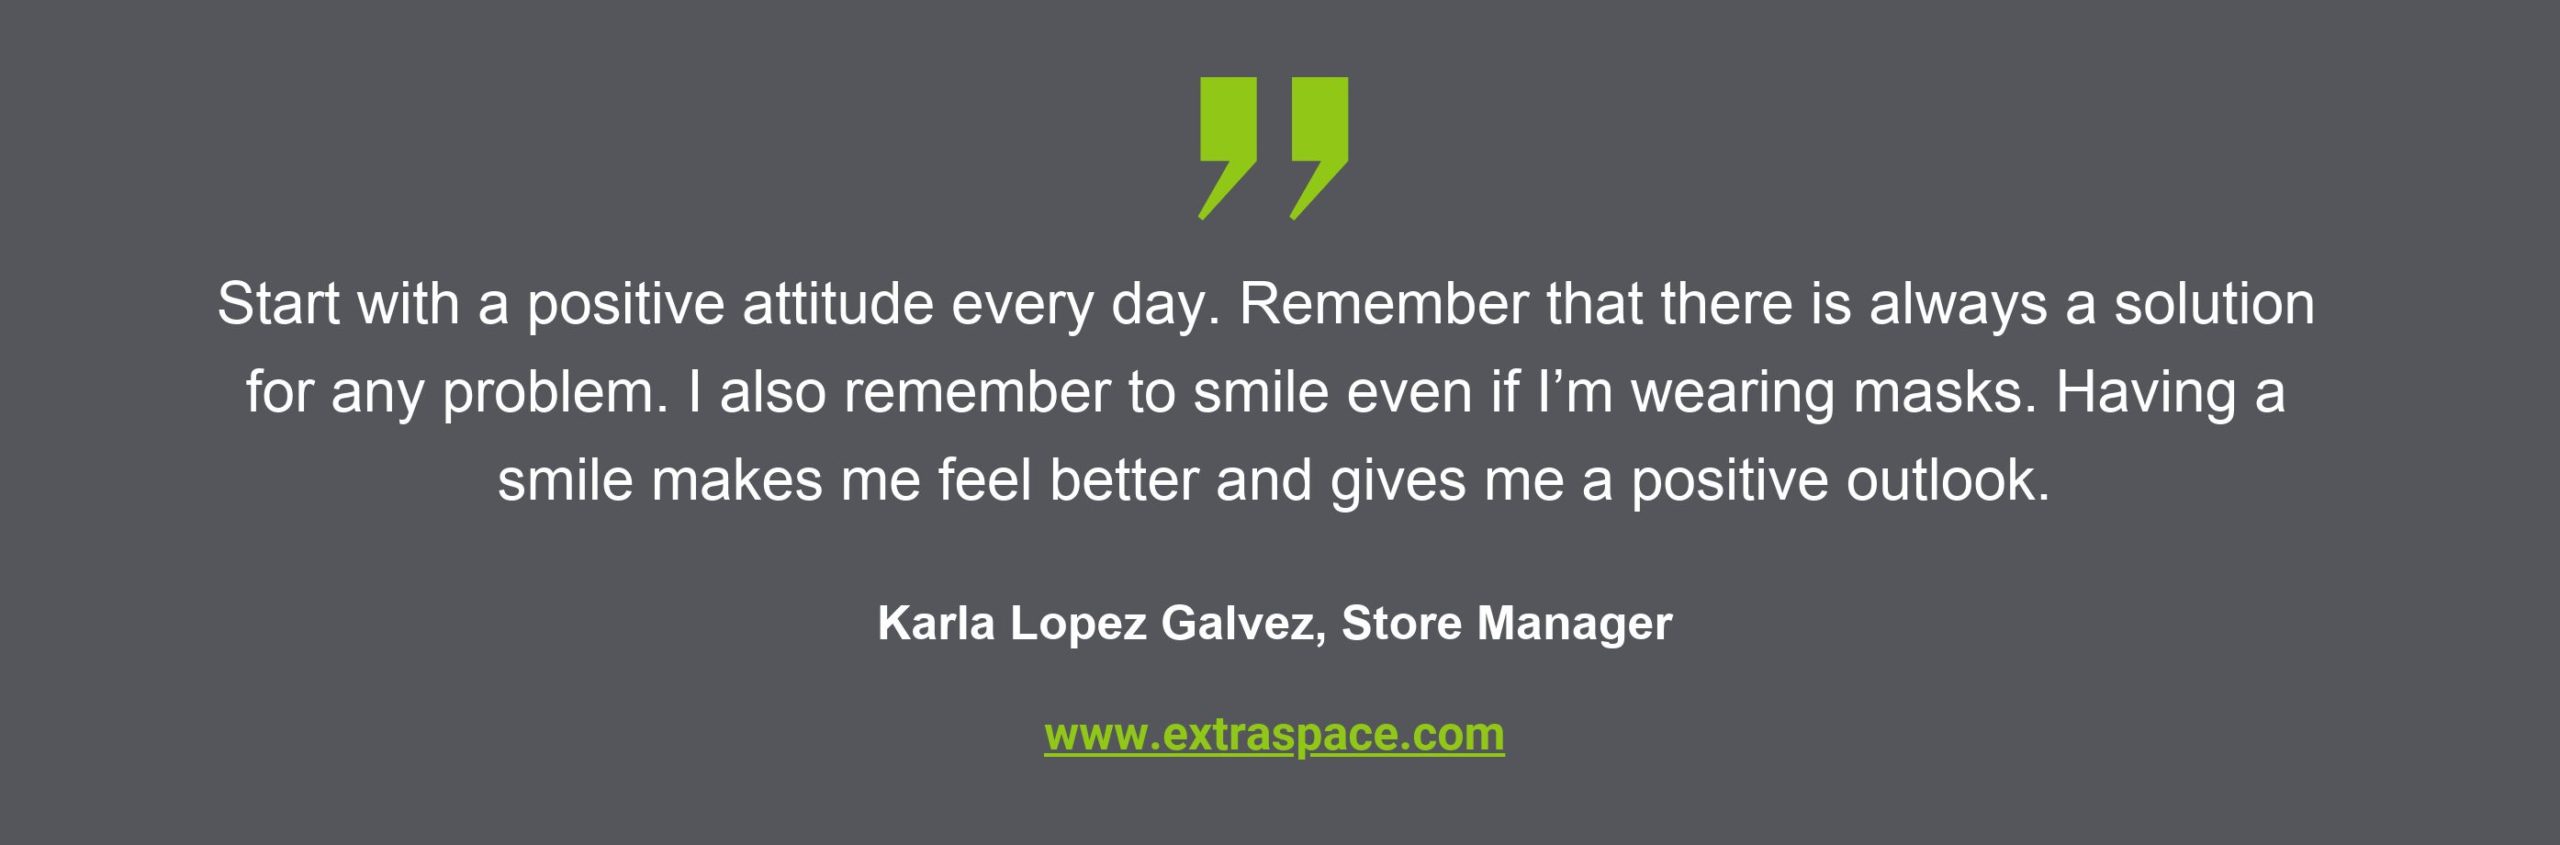 Attitude quote from Karla Lopez Galvez, Extra Space Storage